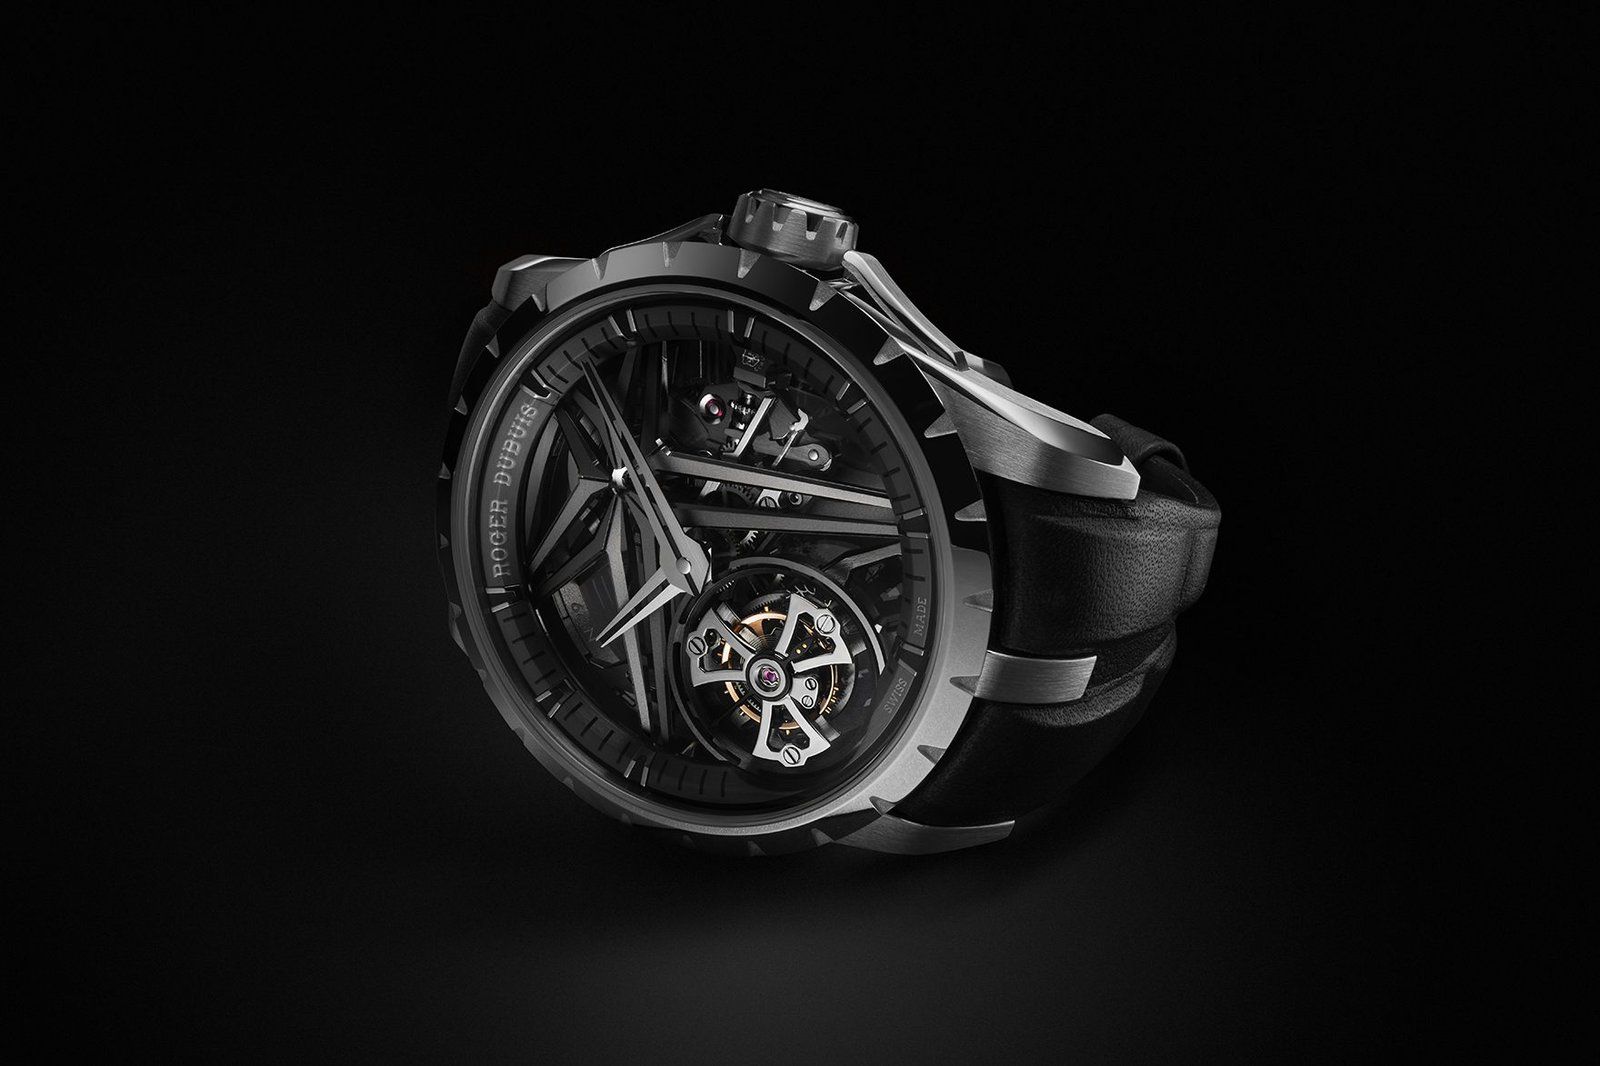 Roger Dubuis’s - Excalibur Single Flying Tourbillon black watch